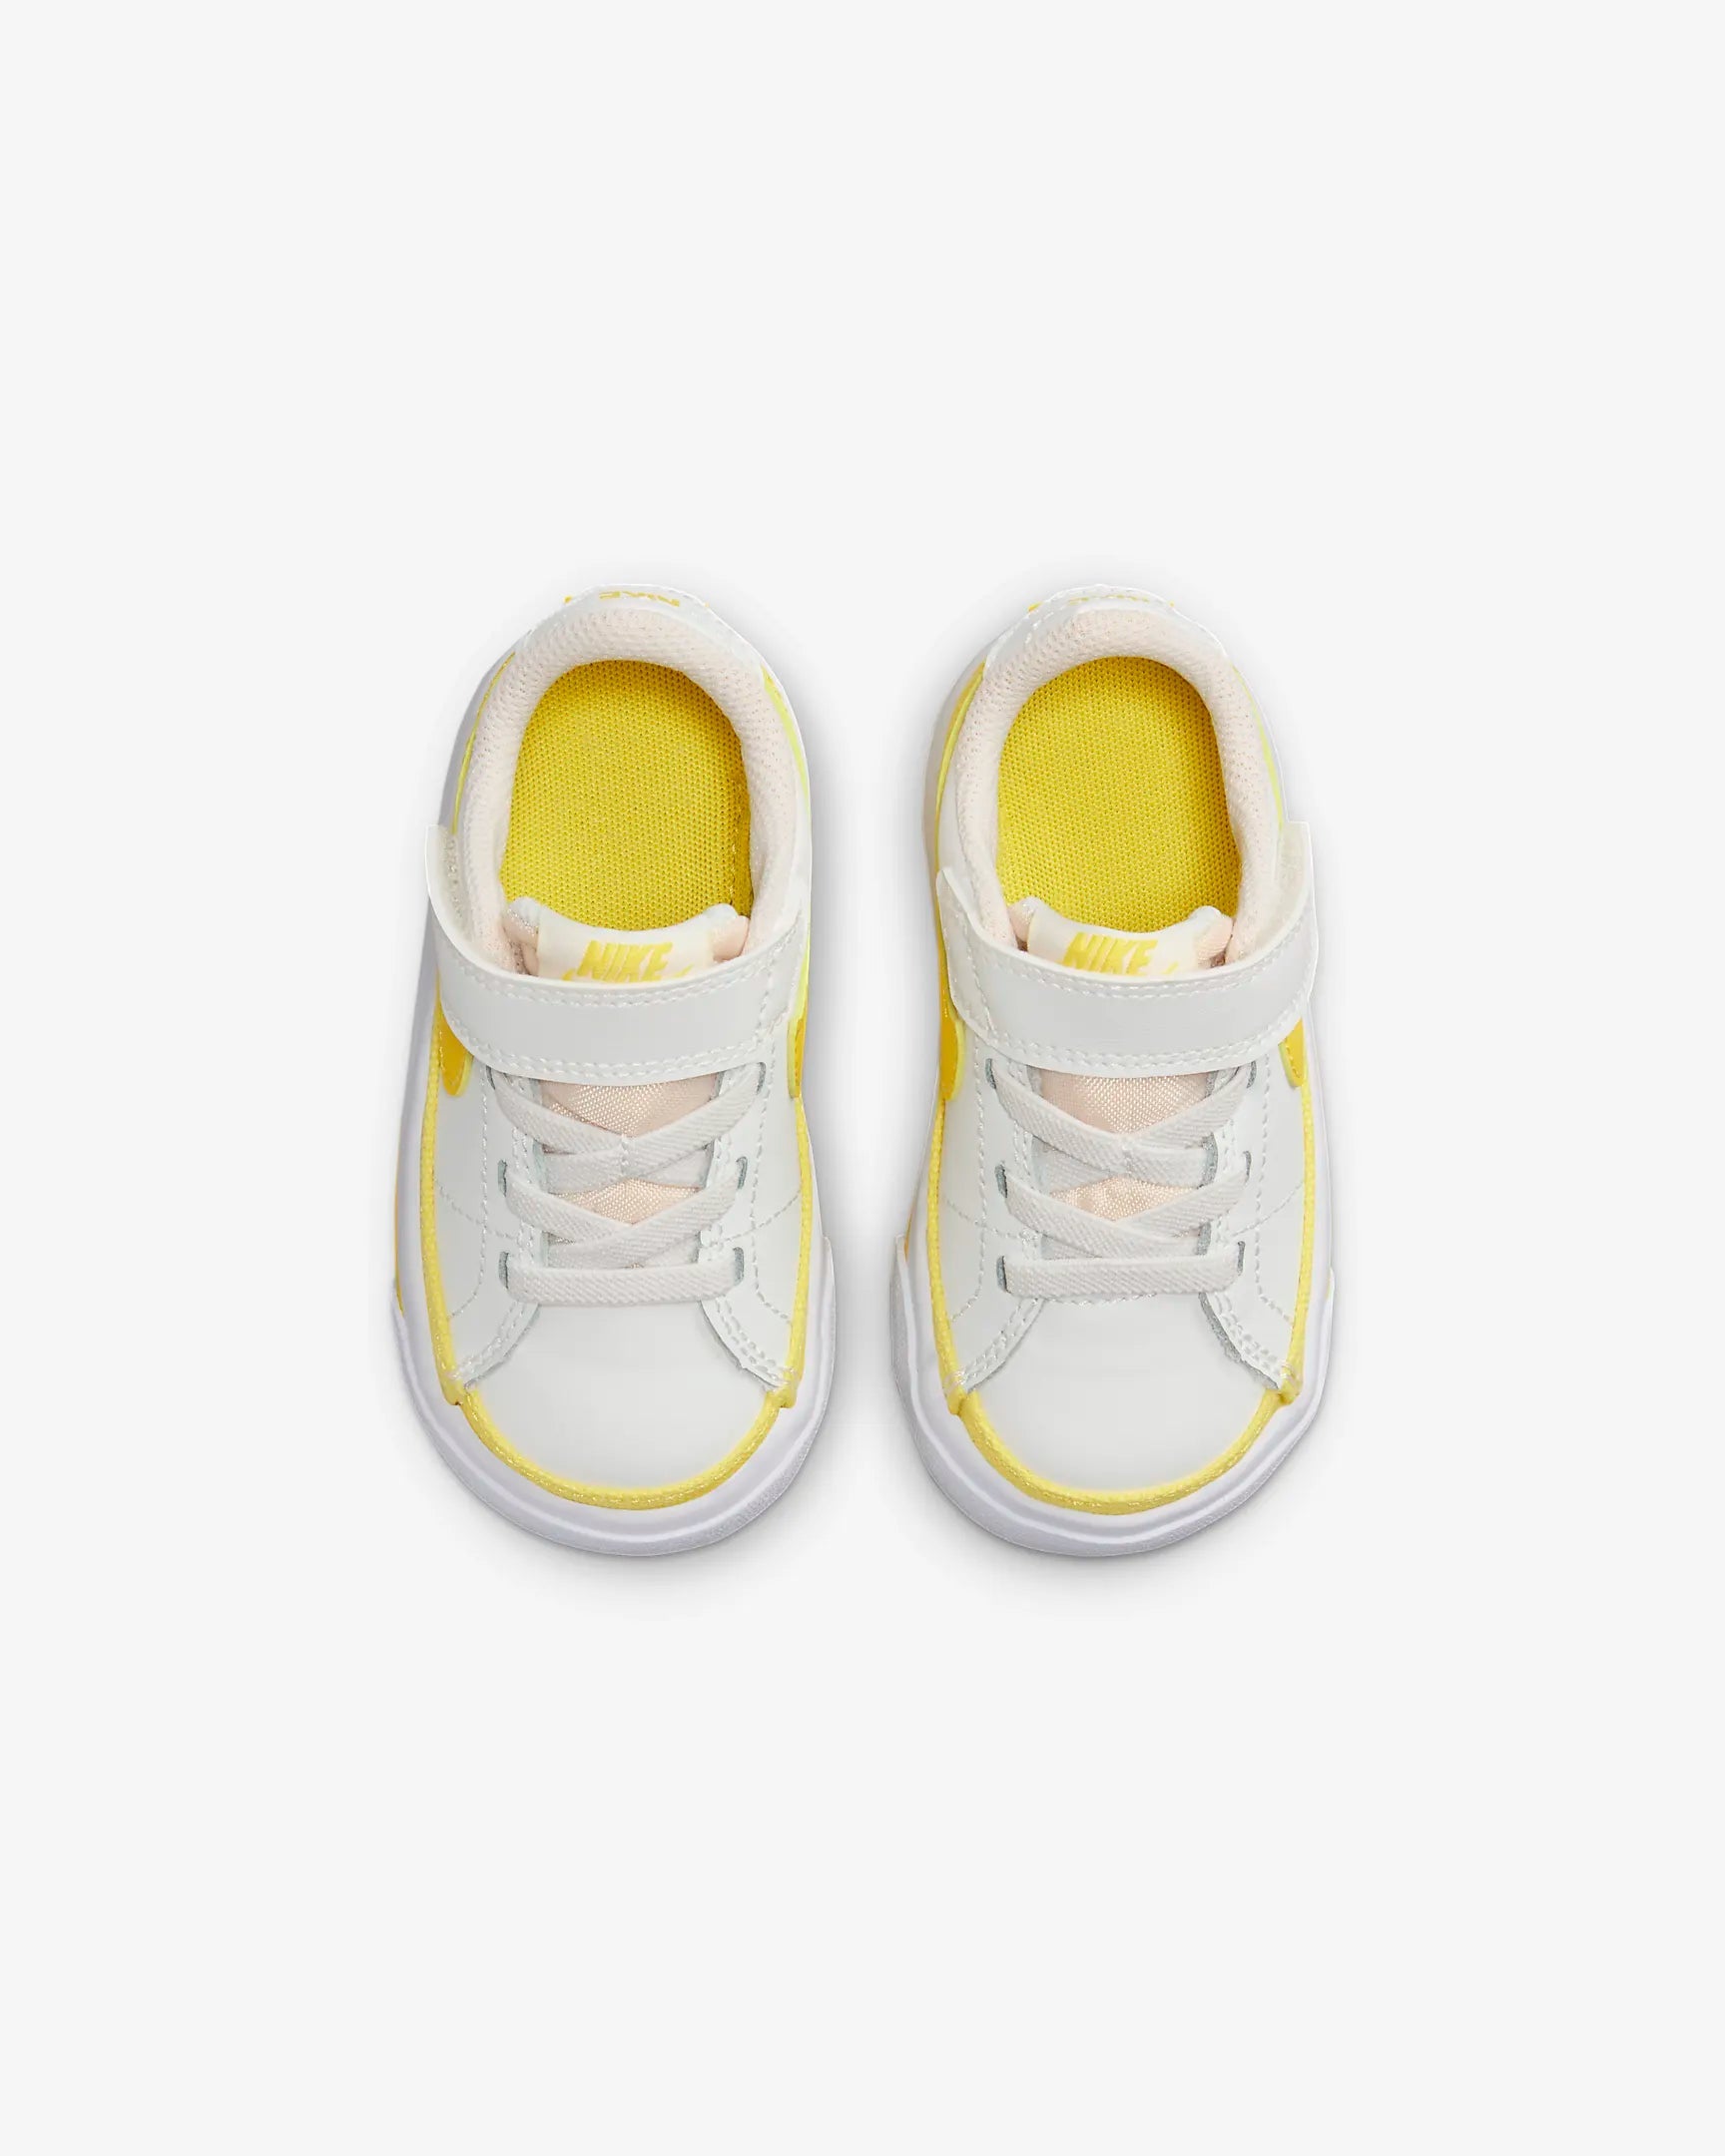 Nike Nike INFANT'S Court Legacy YELLOW/WHITE SHOE - INSPORT